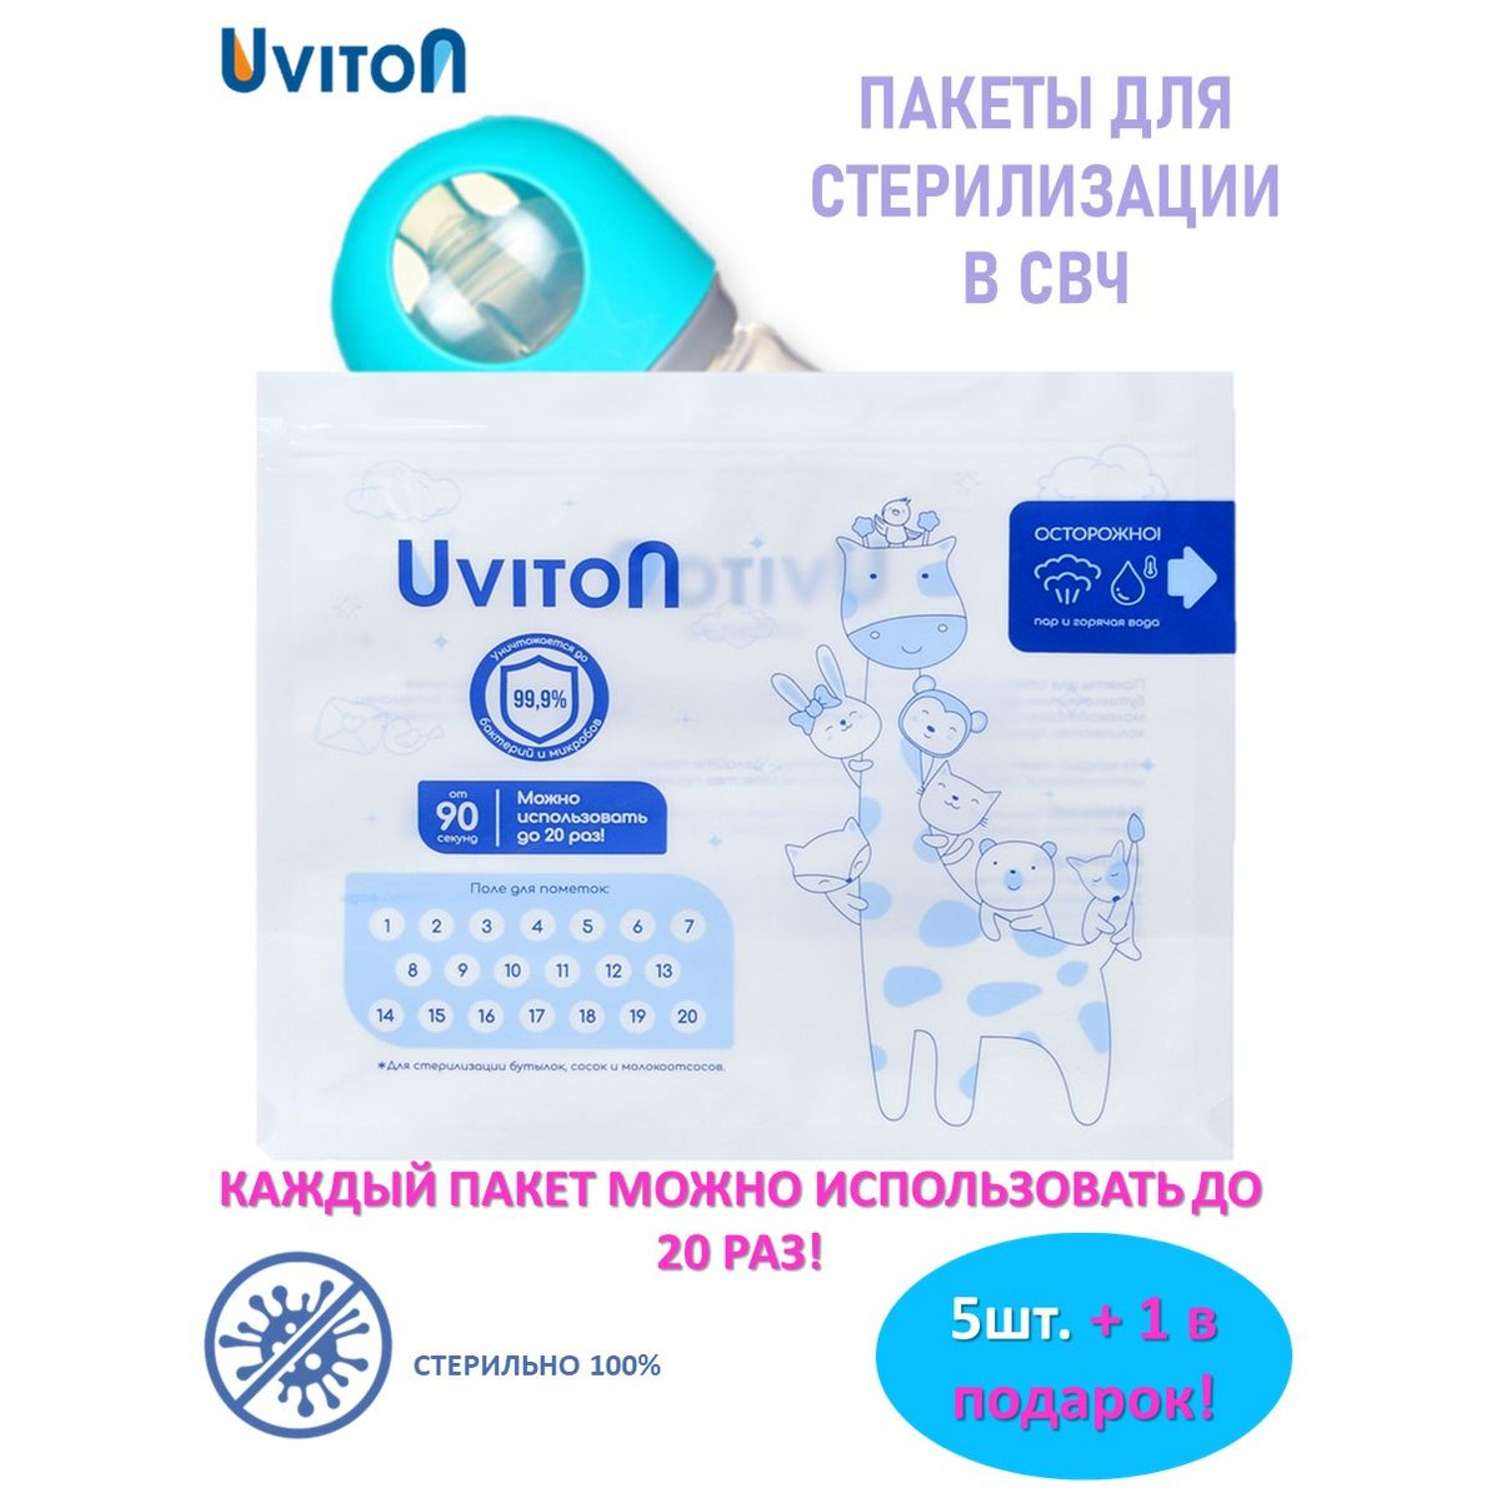 Пакеты для стерилизации Uviton бутылочек 6 шт многоразовые - фото 2